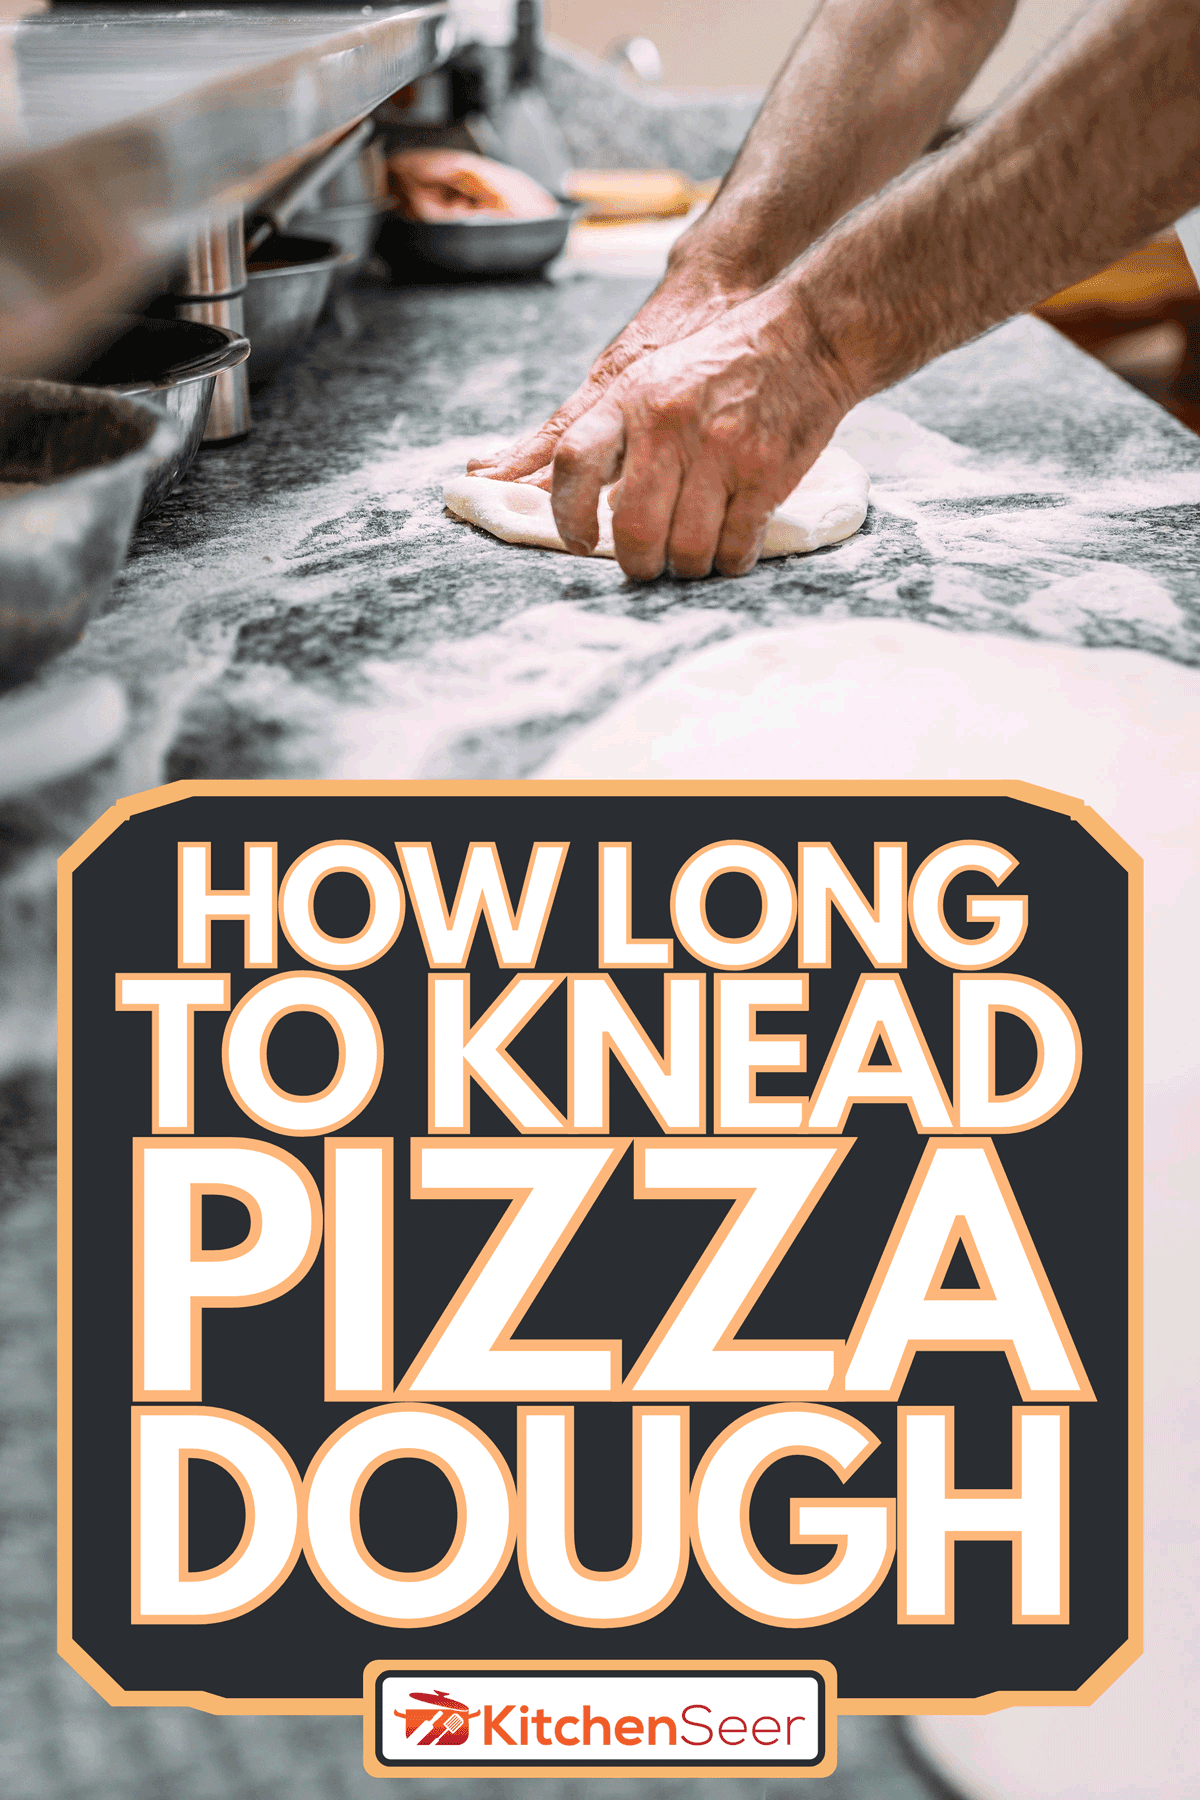 Chef preparing pizza dough, How Long to Knead Pizza Dough